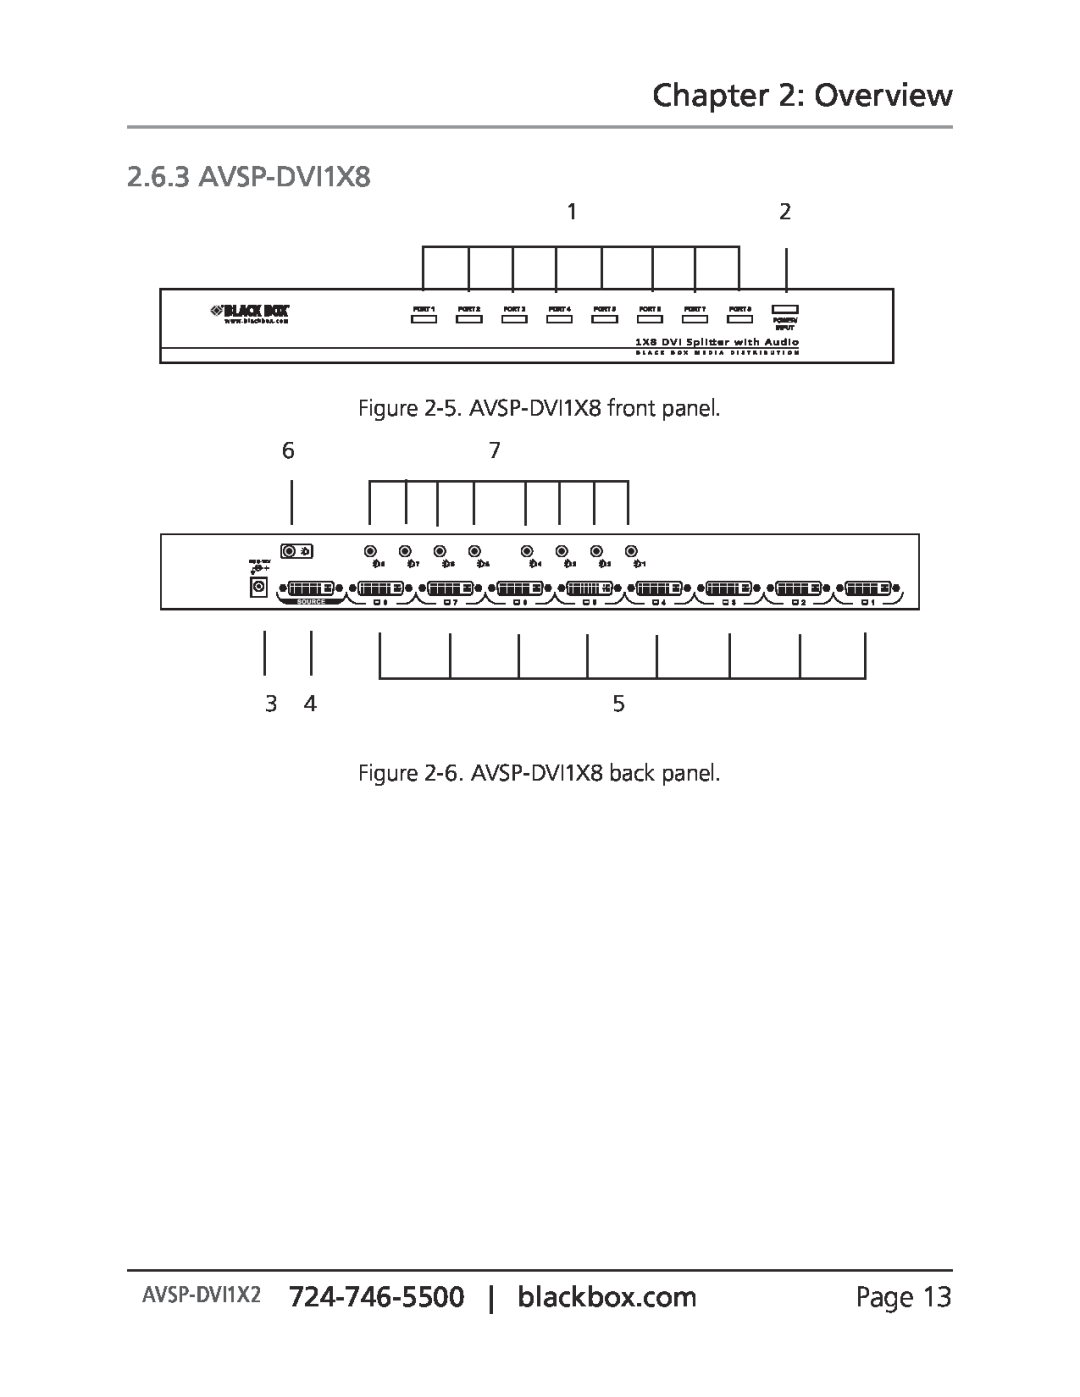 Black Box Overview, AVSP-DVI1X2 724-746-5500| blackbox.com, 5. AVSP-DVI1X8front panel 67, 6. AVSP-DVI1X8back panel 